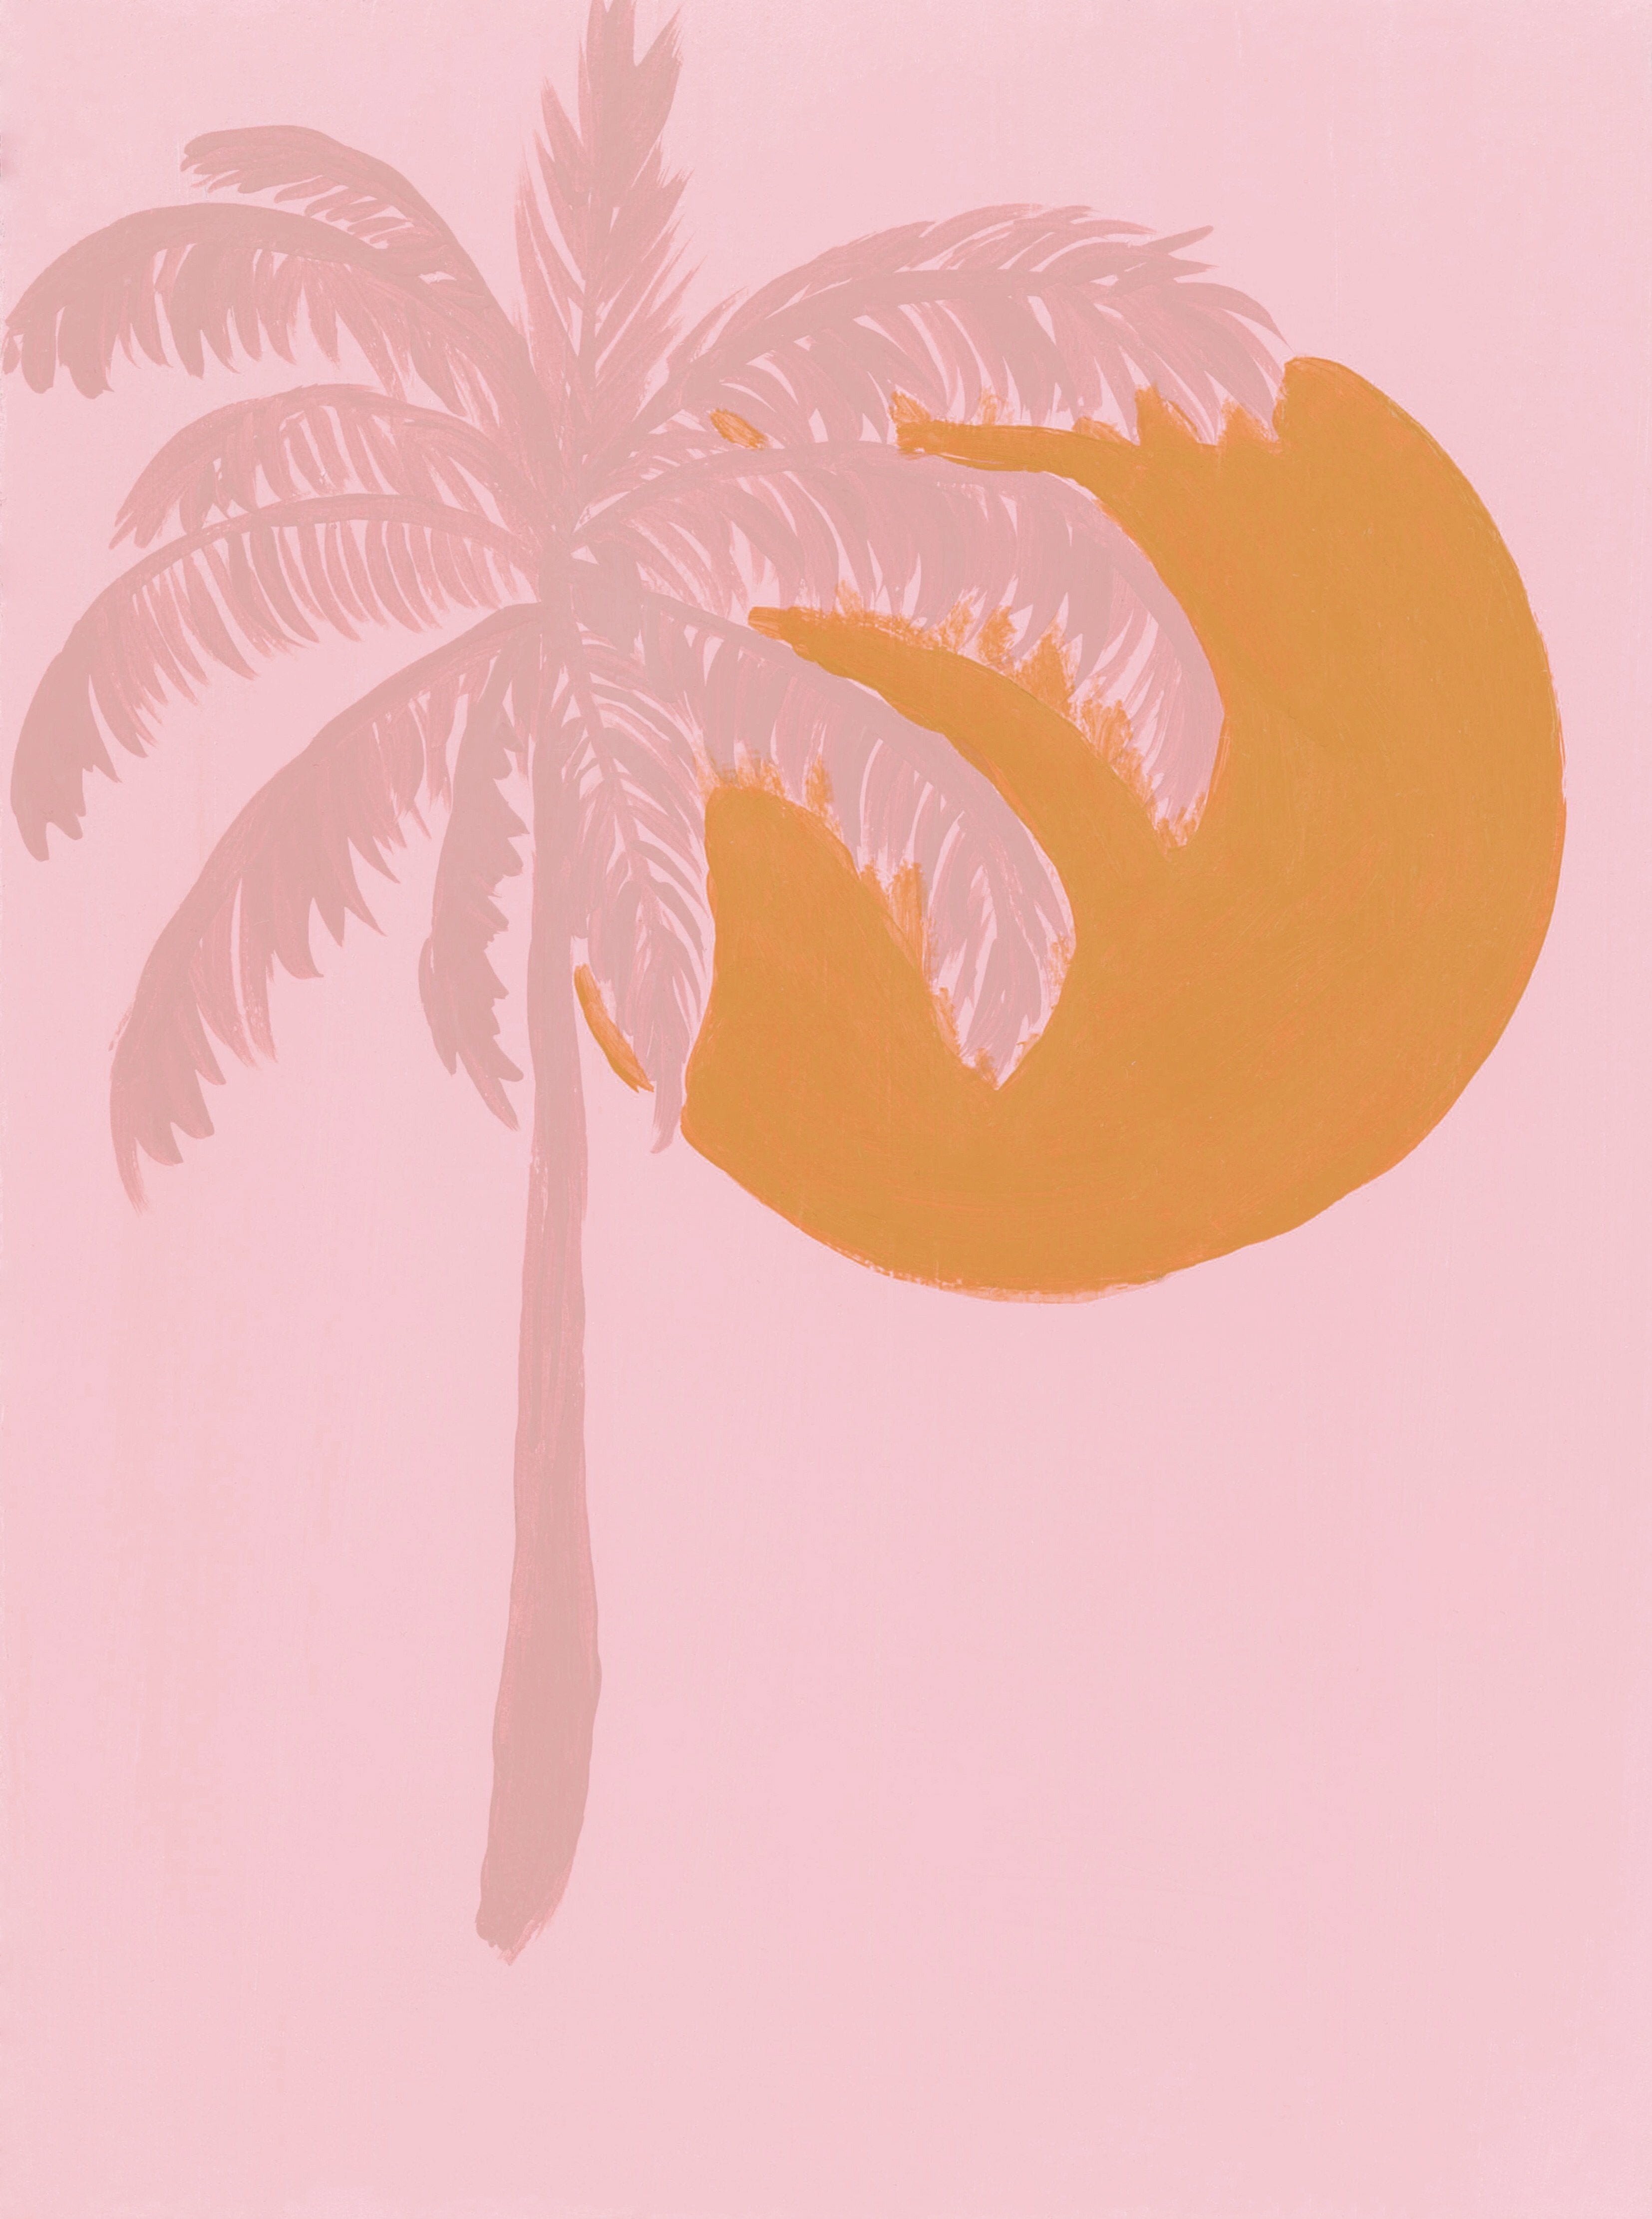 Palm paradise